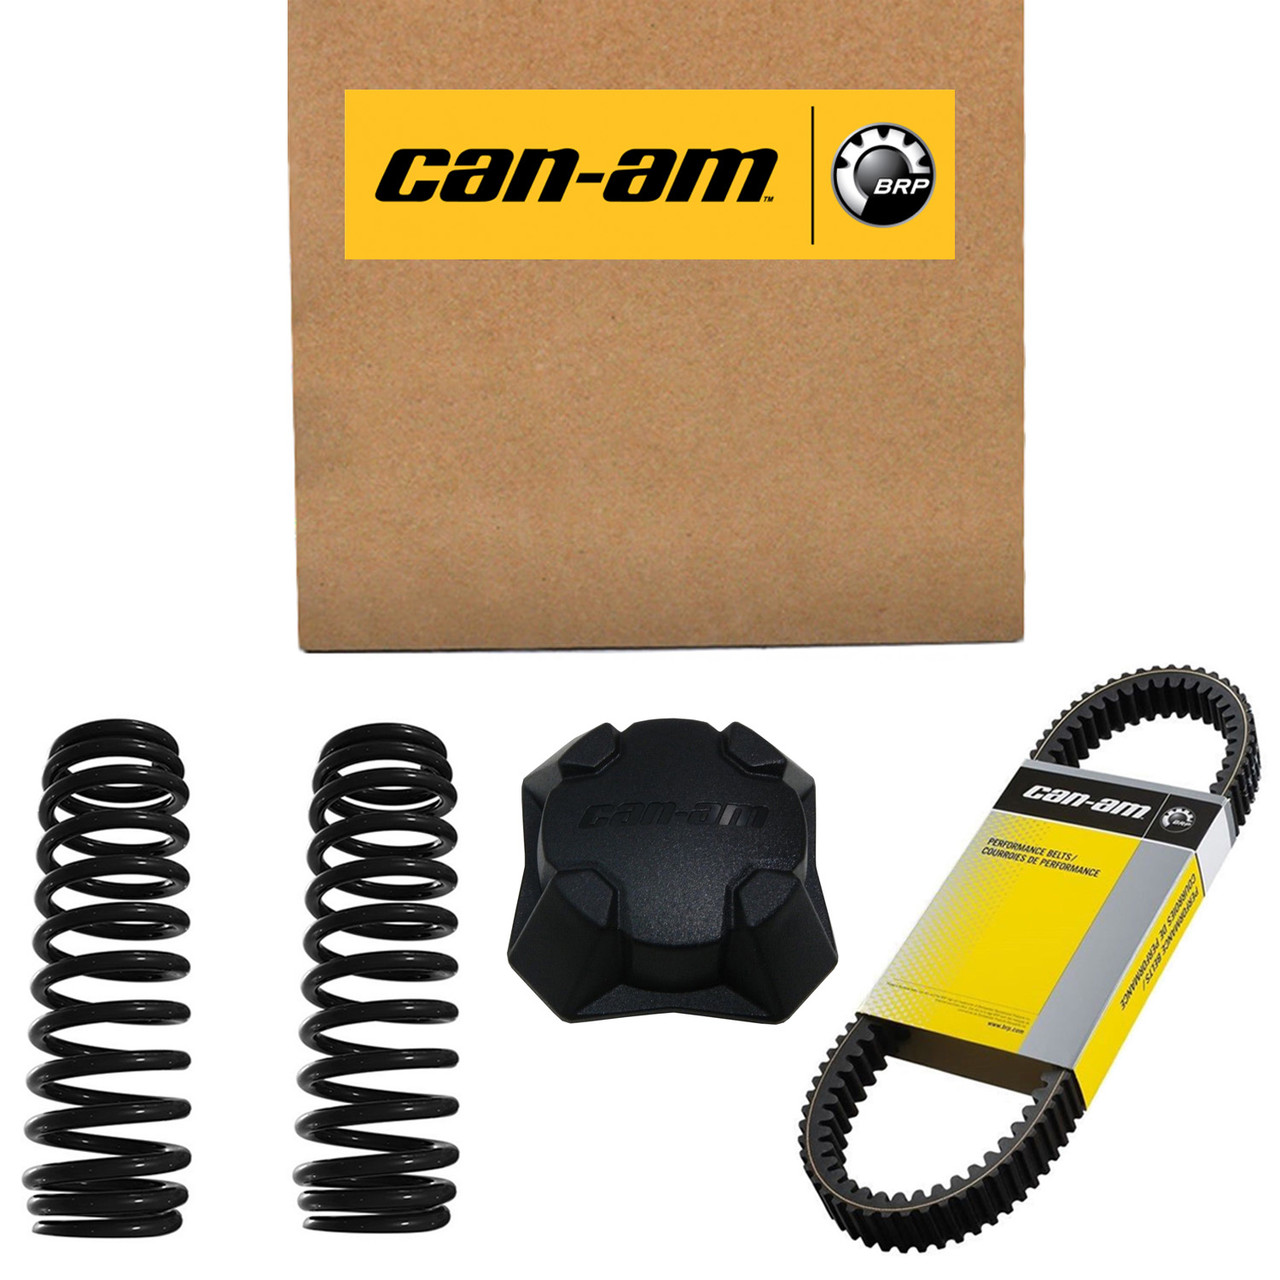 Can-Am New OEM Gear Box, 420686392